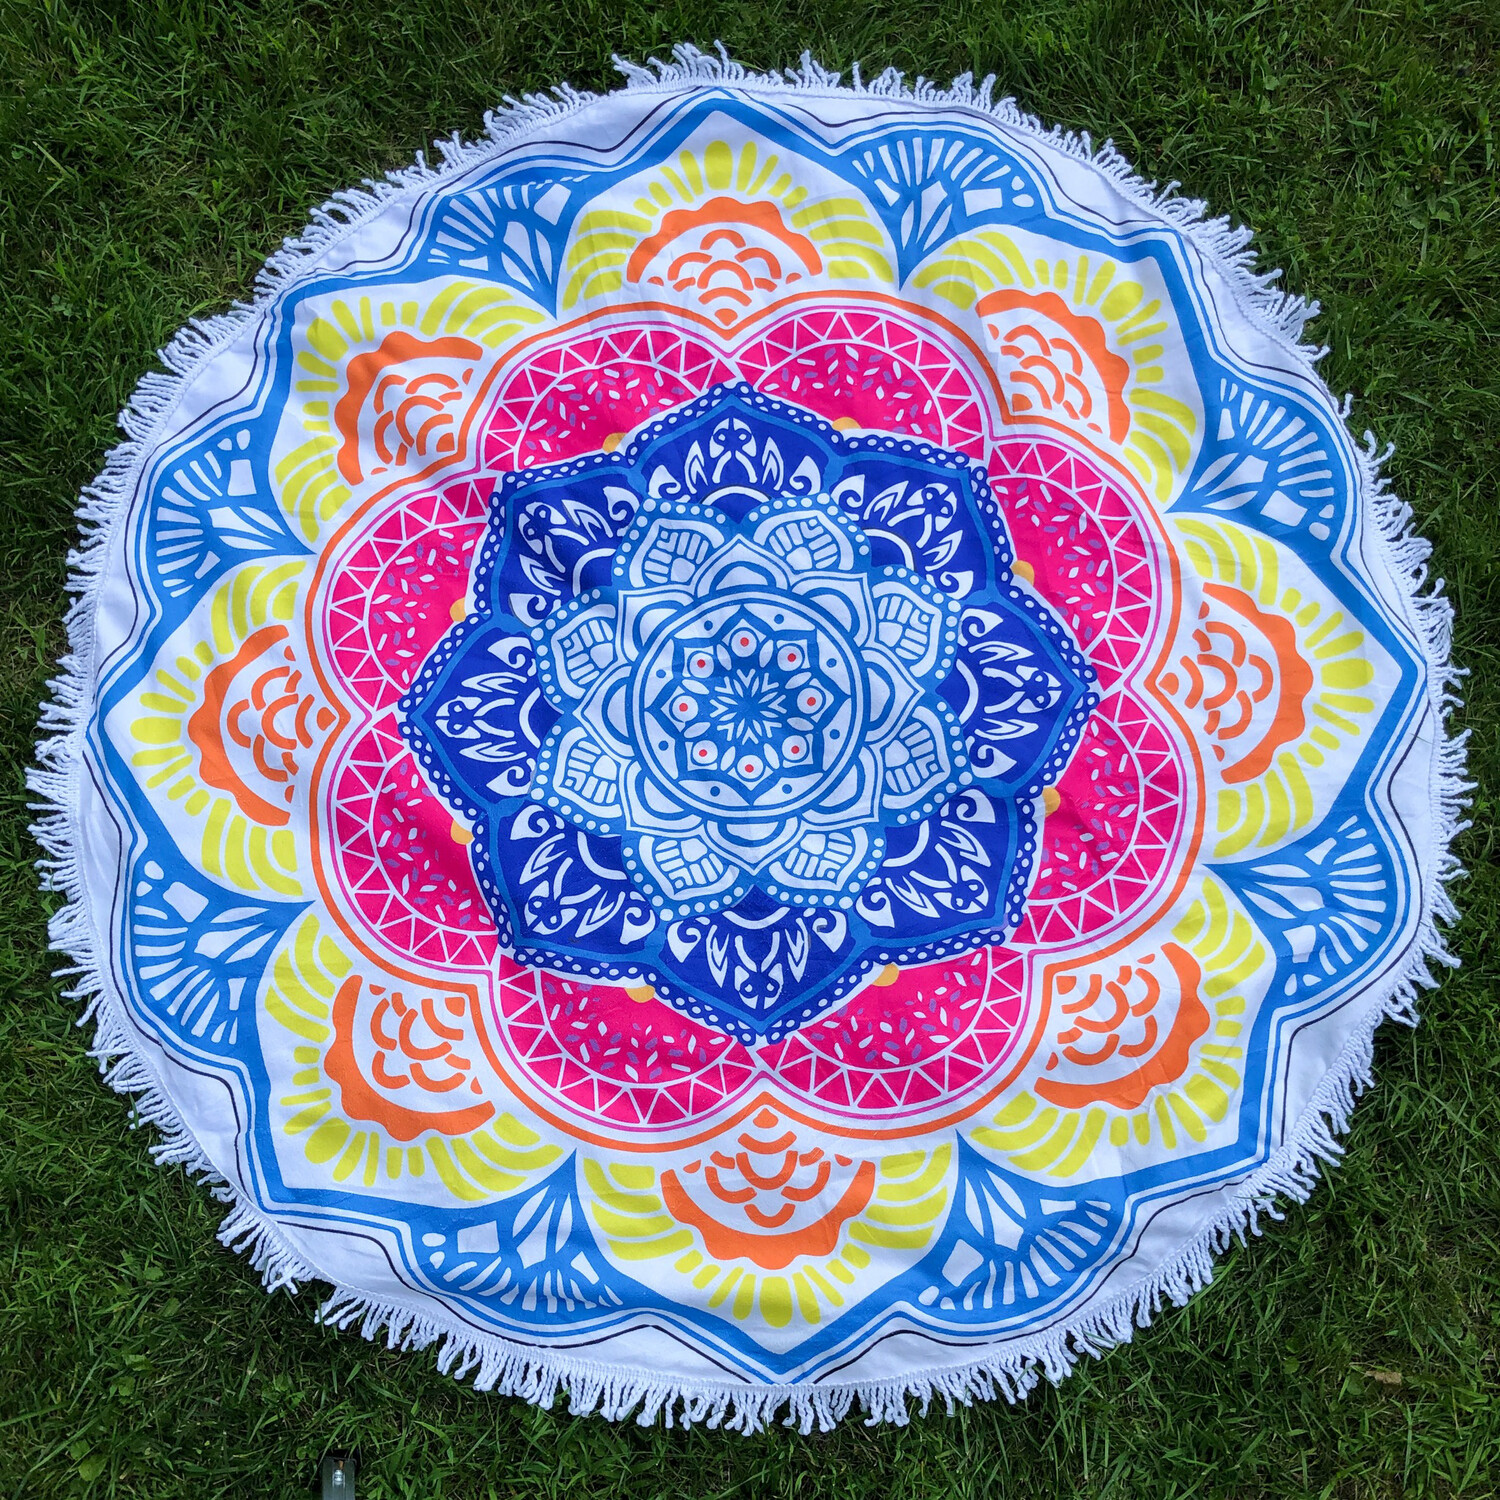  Large Round Printed Beach Towel Blanket With Rainbow Mandala Pattern 